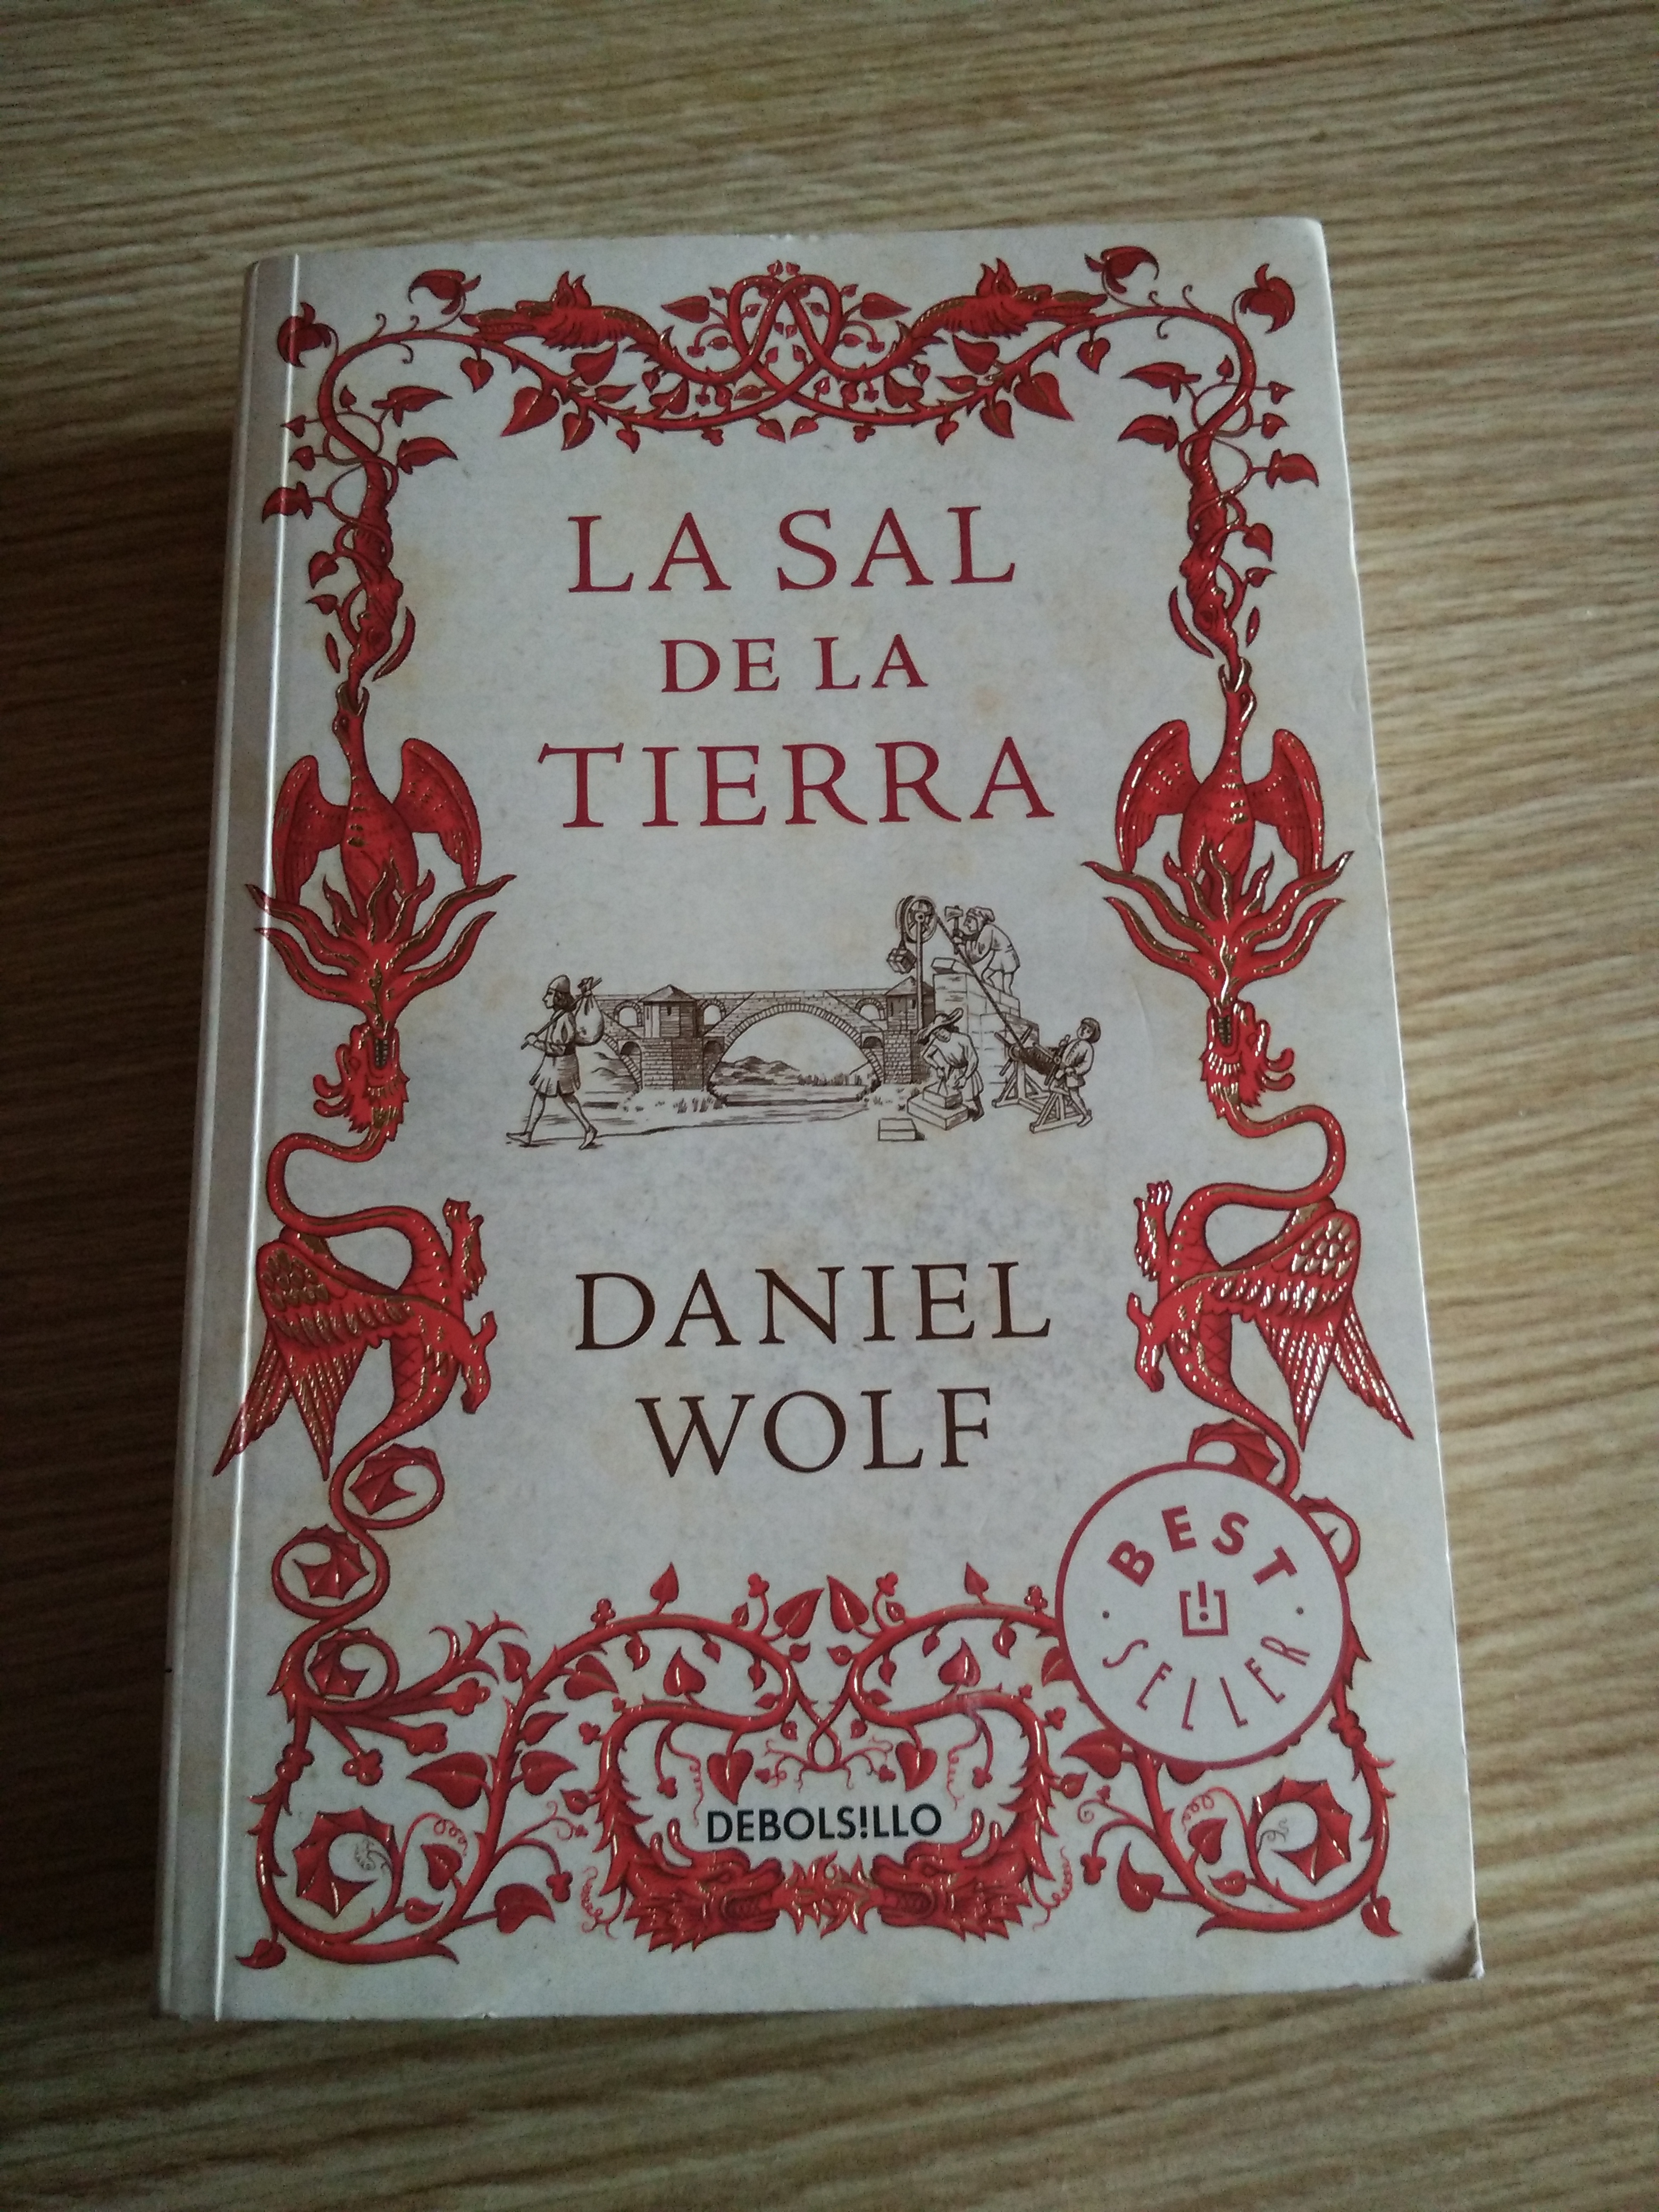 La sal de la tierra, Daniel Wolf, novela histórica, Edad Media